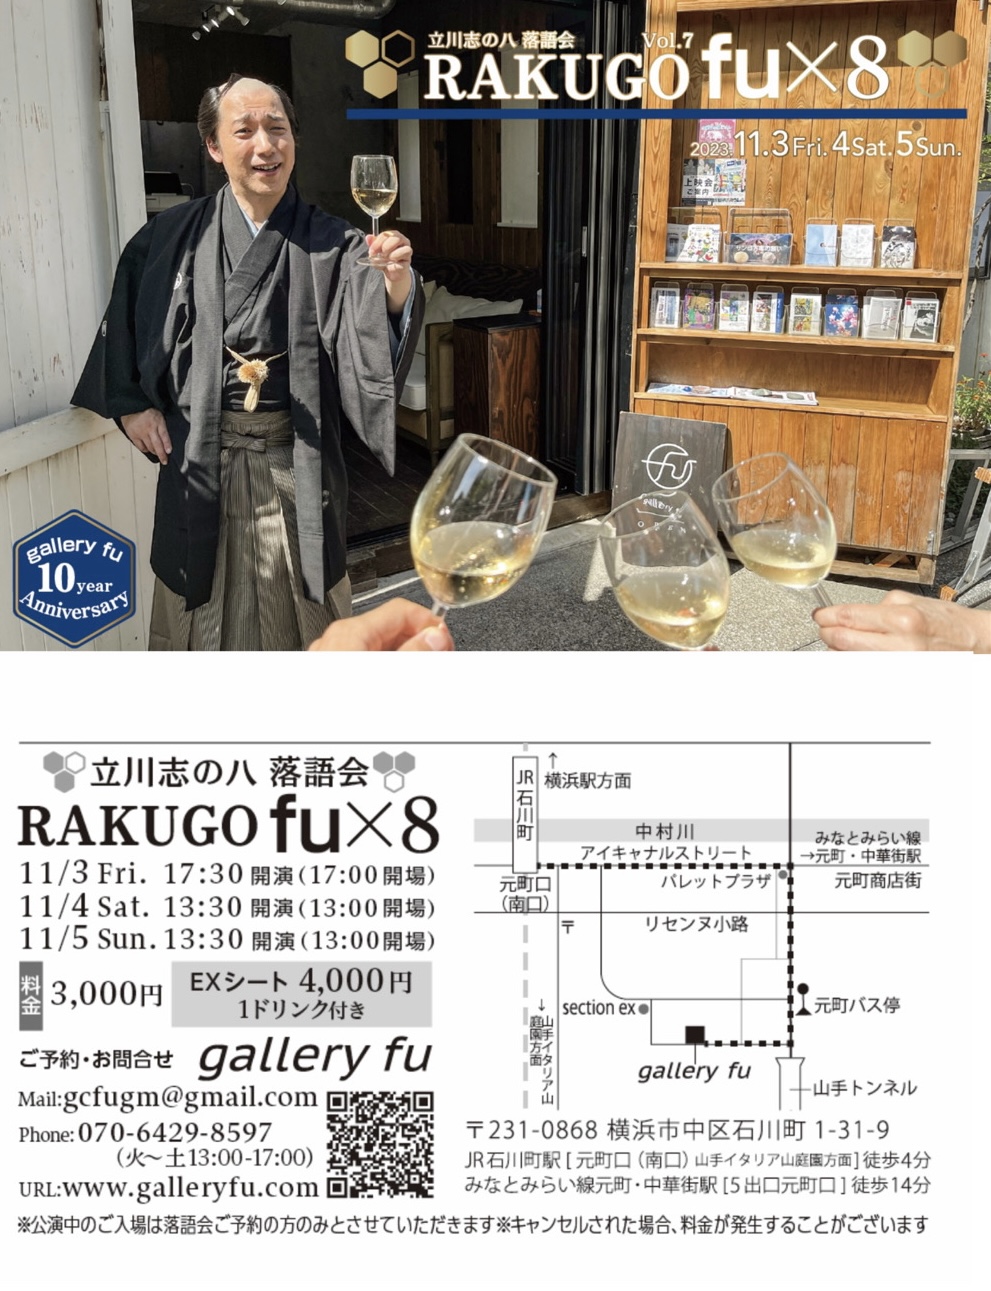 RAKUGO fu×8 vol.7~the 10th Anniversary